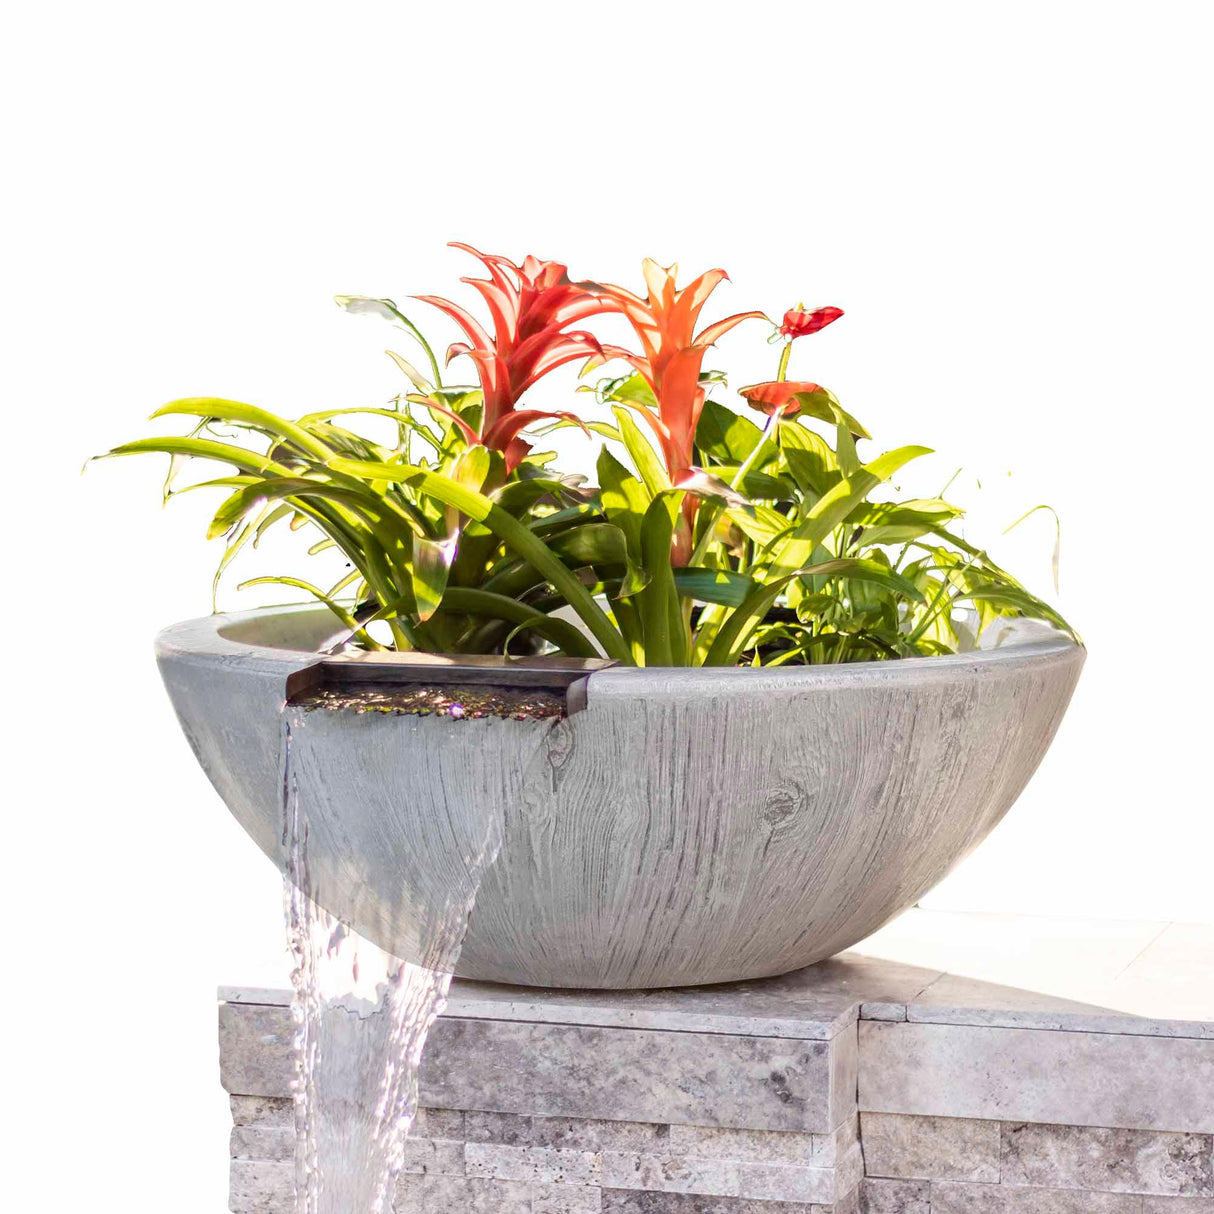 The Outdoor Plus Sedona Planter and Water Bowl - Woodgrain Concrete